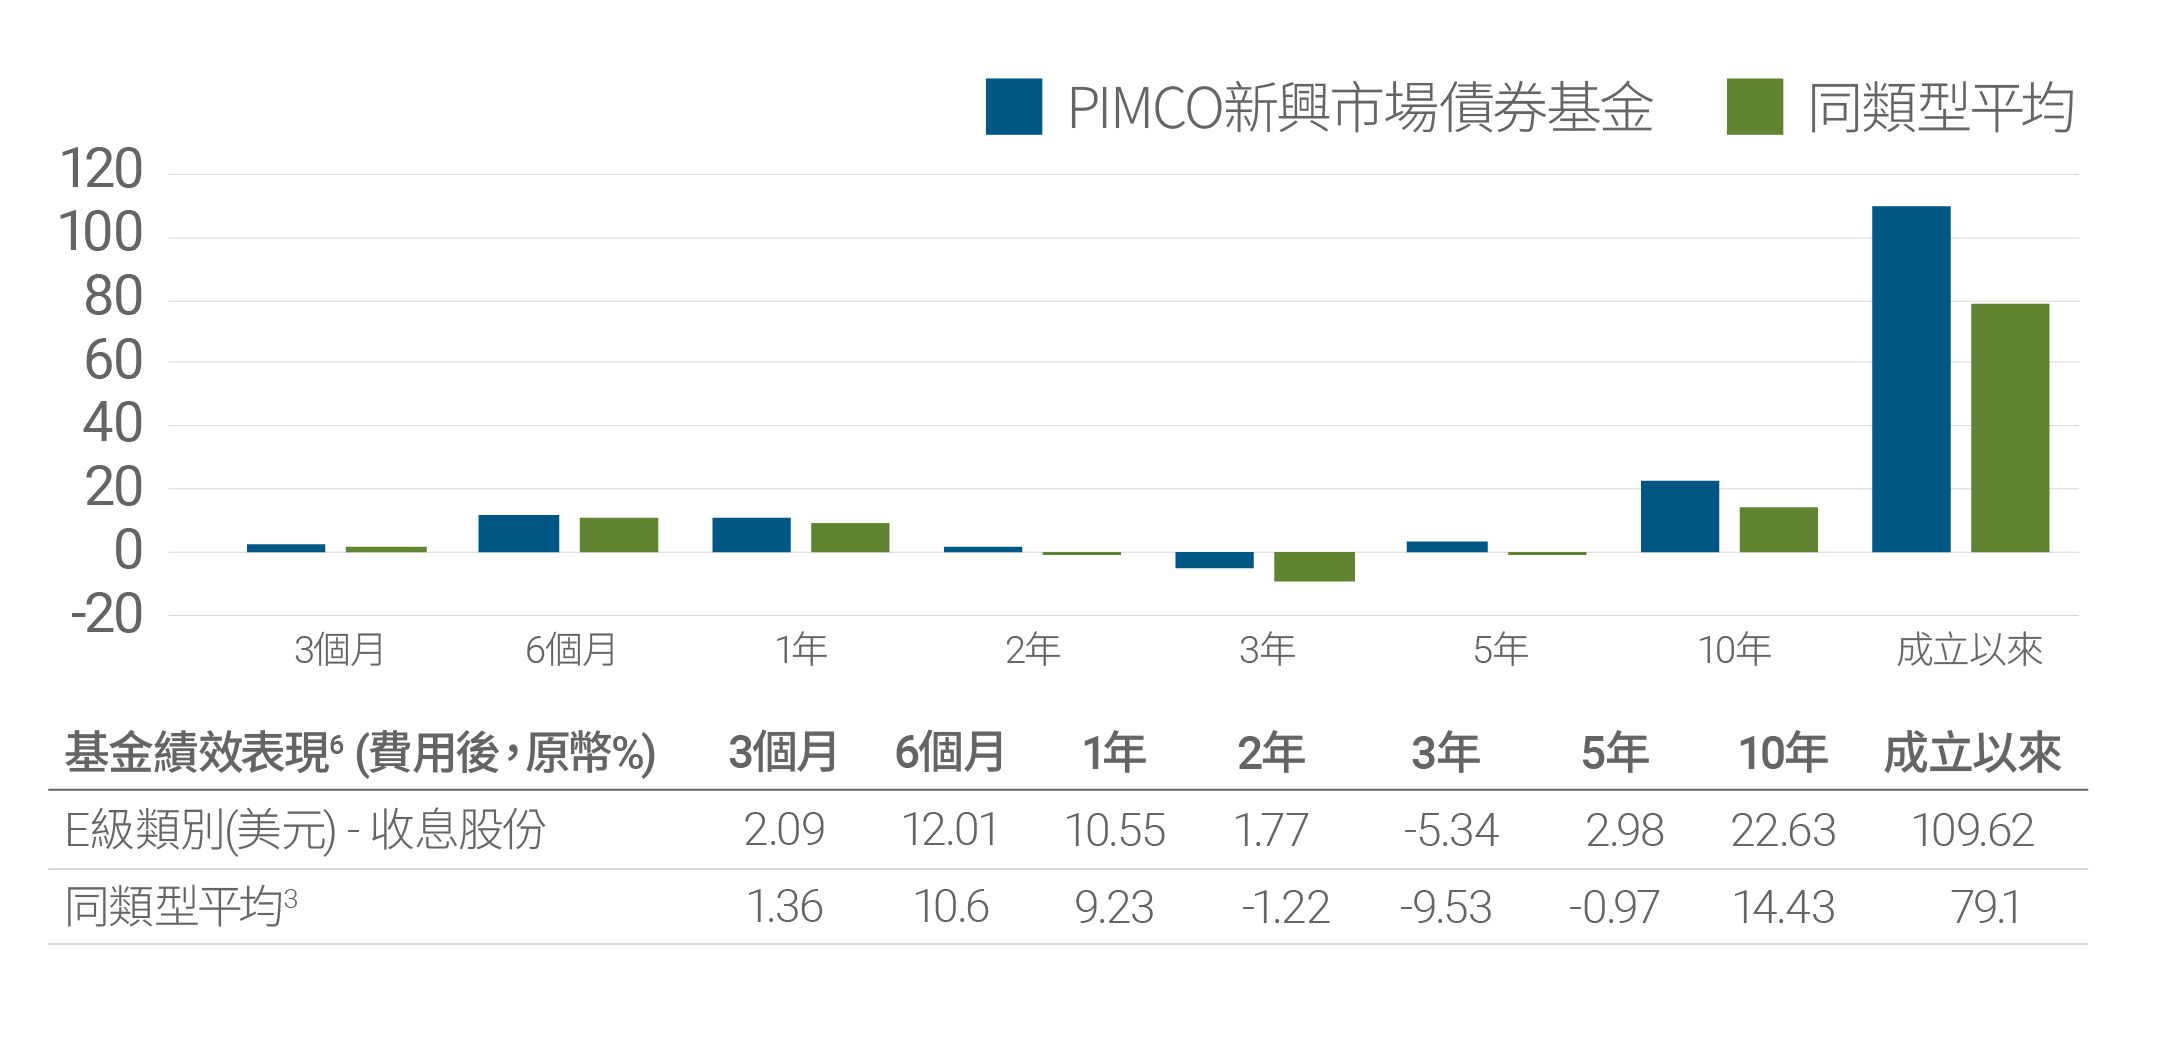 PIMCO新興市場債券基金成立以來費用後原幣績效表現為107.90，同類型基金平均則為77.11